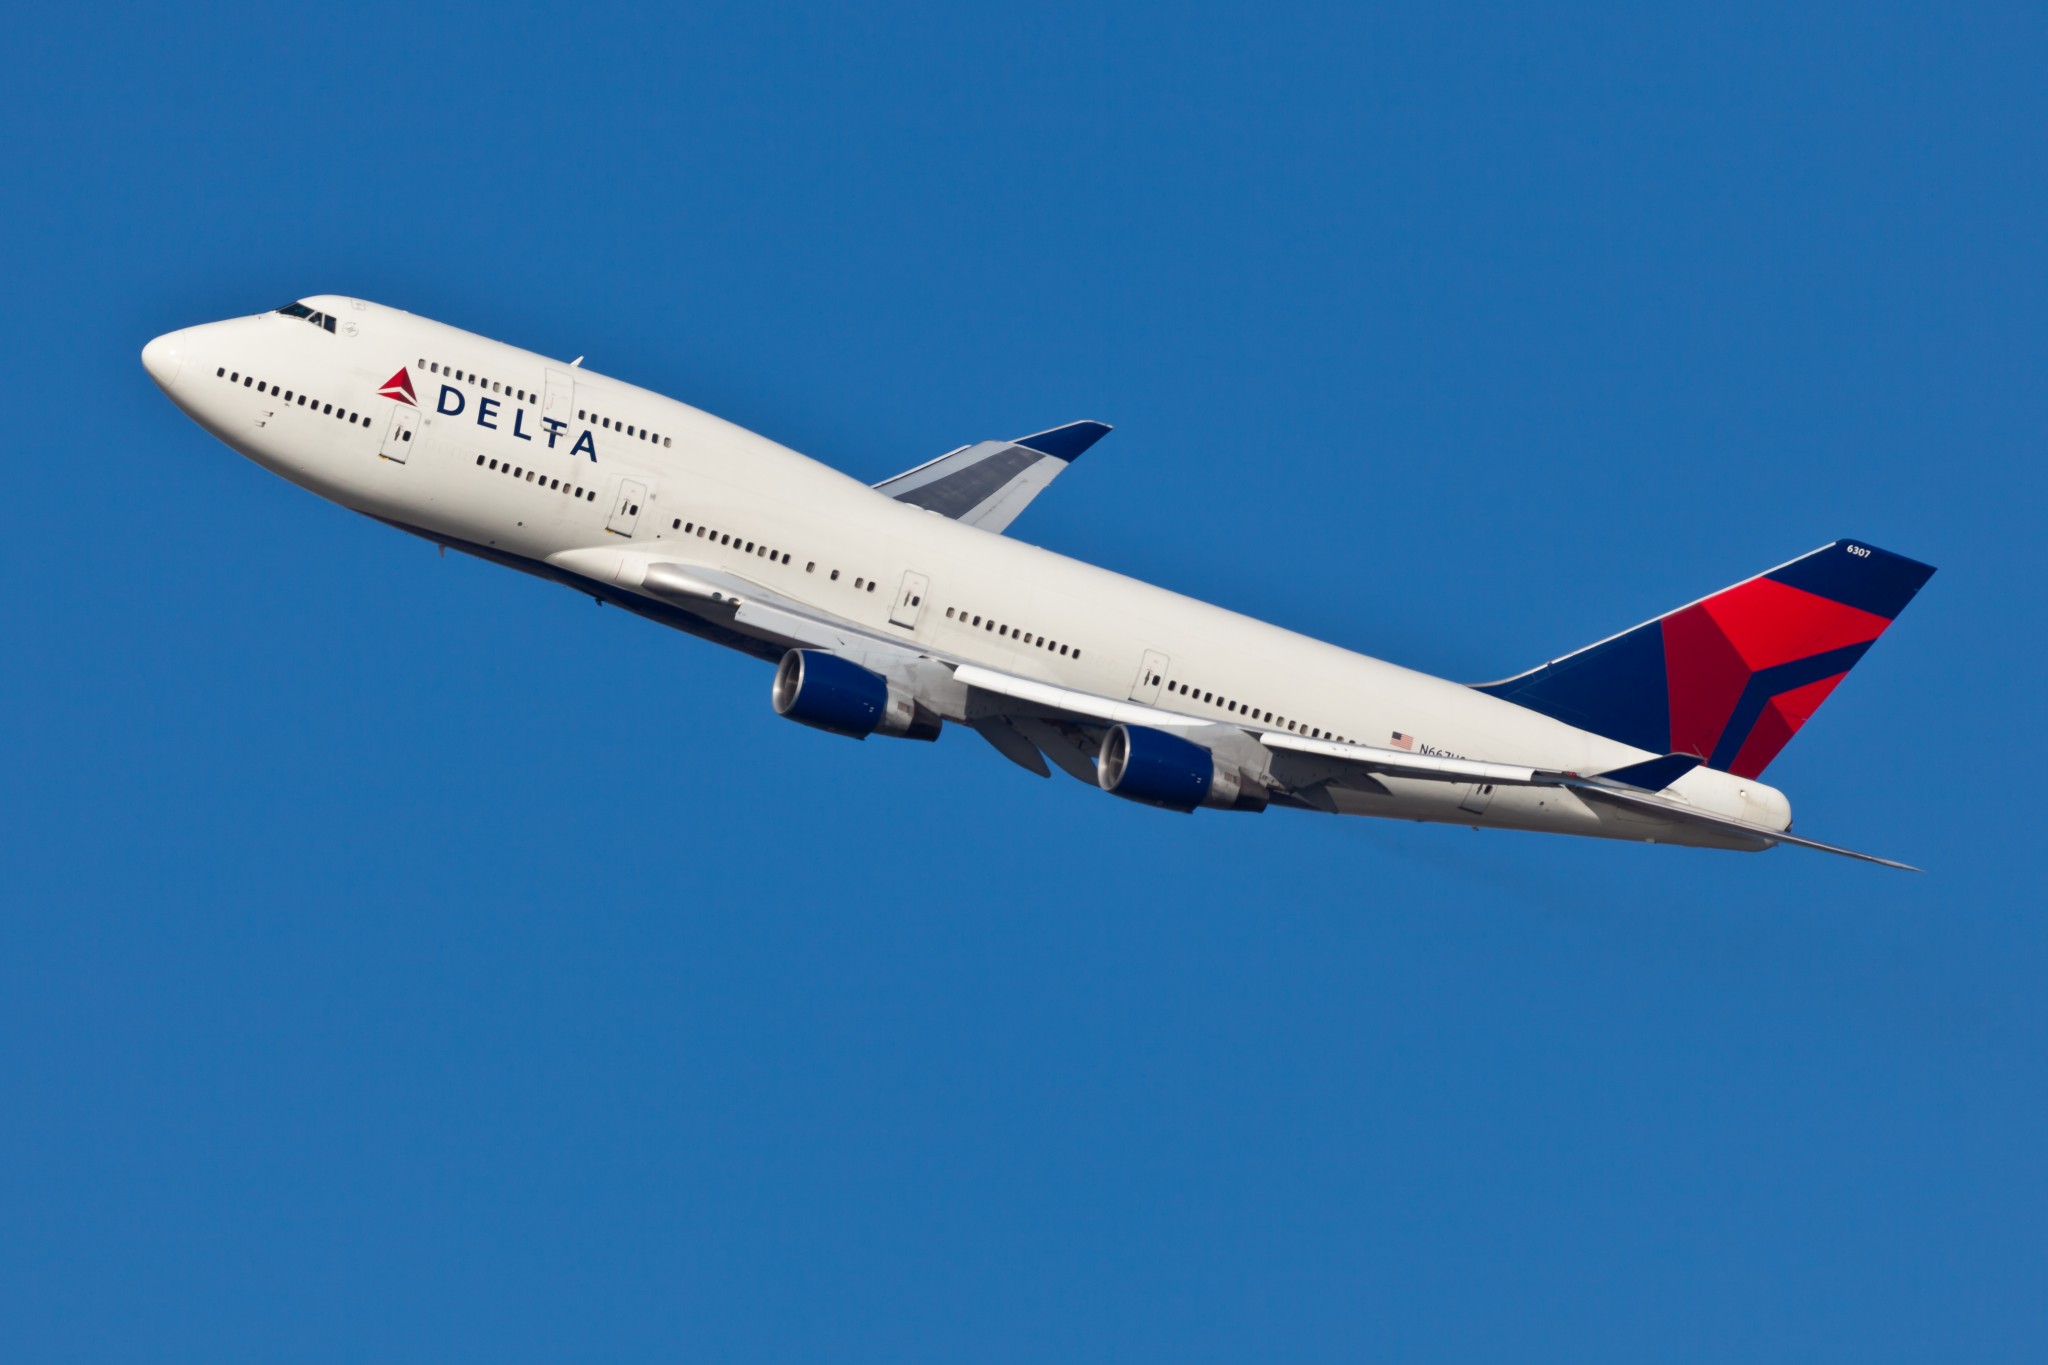 Delta announces new routes to connect New York-JFK, Boston to Europe